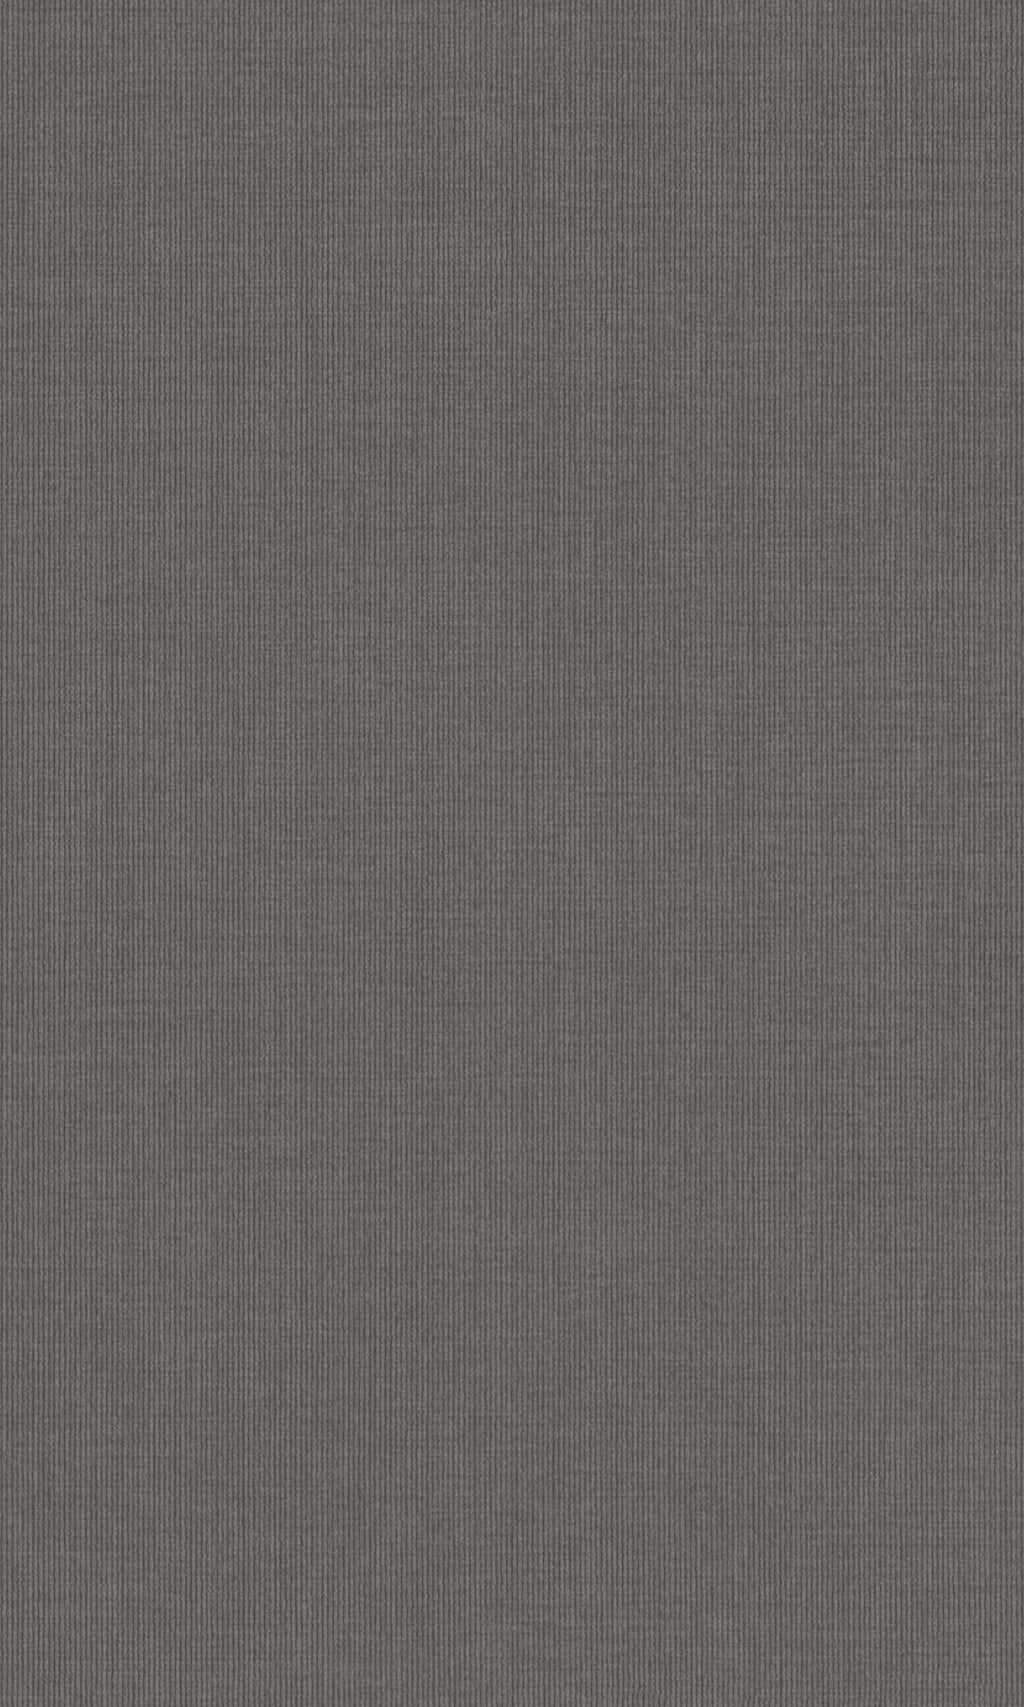 Charcoal Grey Basic Textured Vinyl Wallpaper C7364